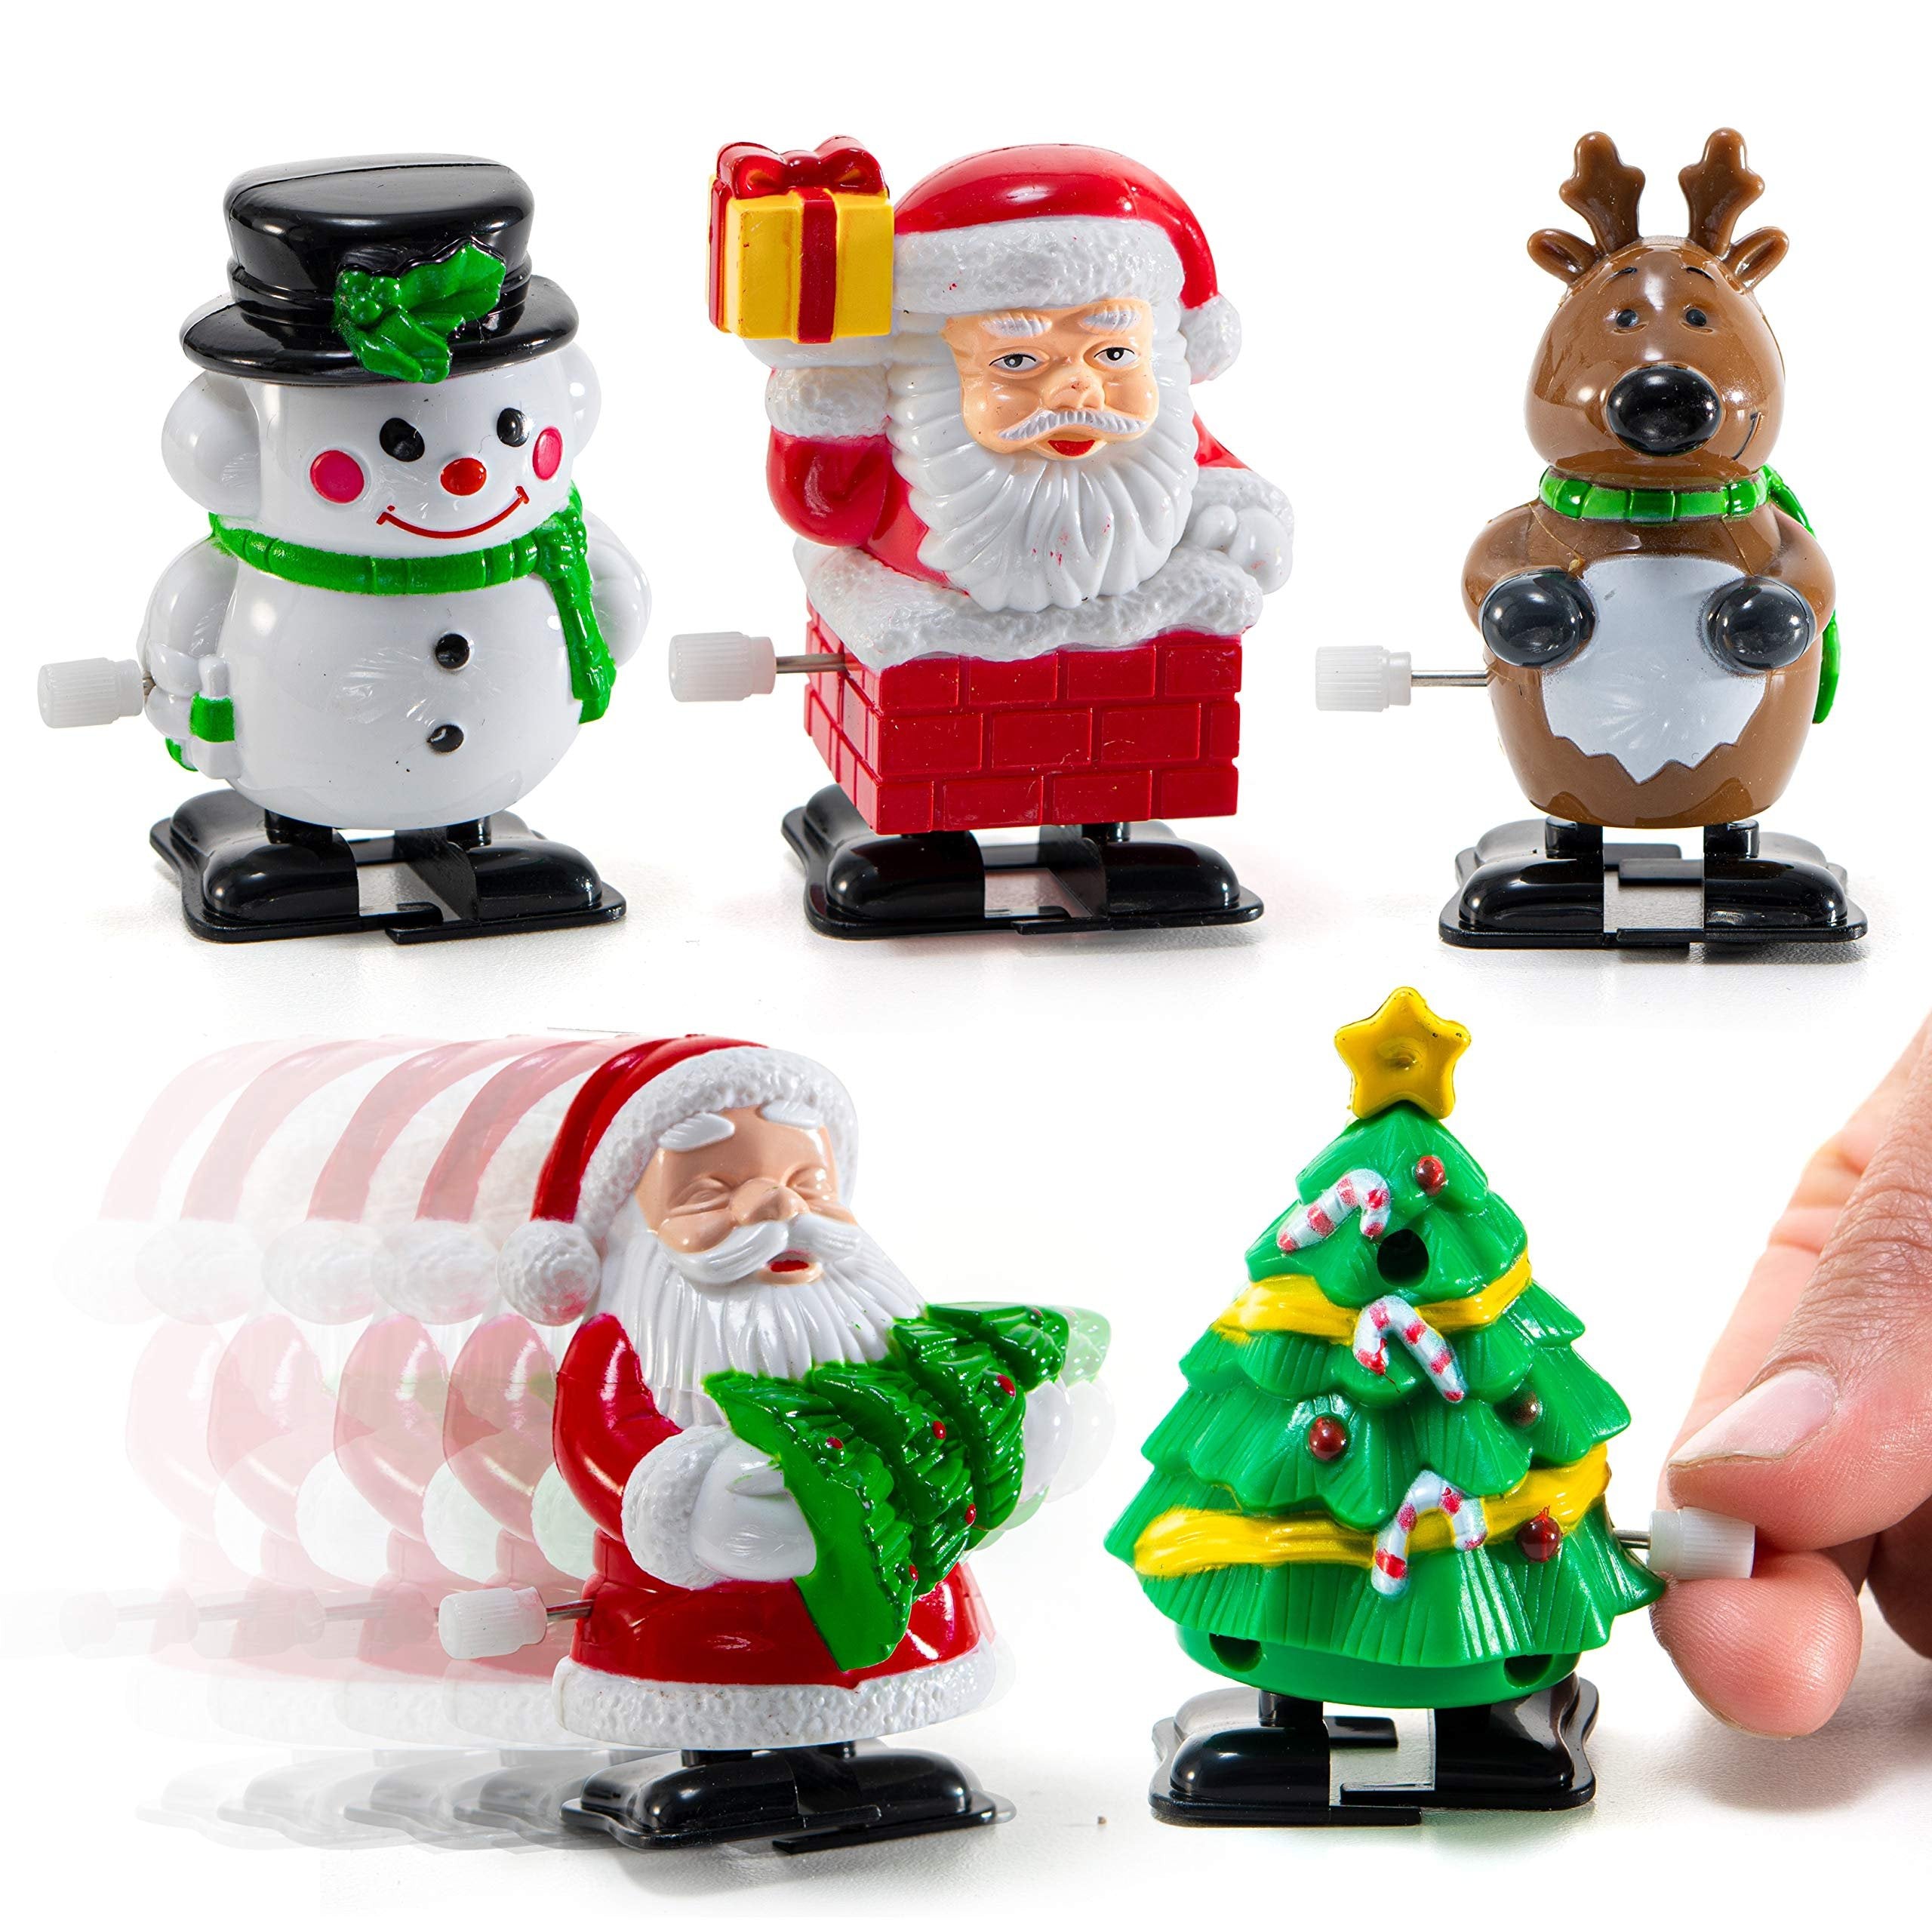 PREXTEX Christmas Wind up Stocking Stuffers- Santas and Snowmen Wind up Stocking Stuffers - Christmas Toys - 2 Santas, 1 Snowman, and 1 Reindeer.